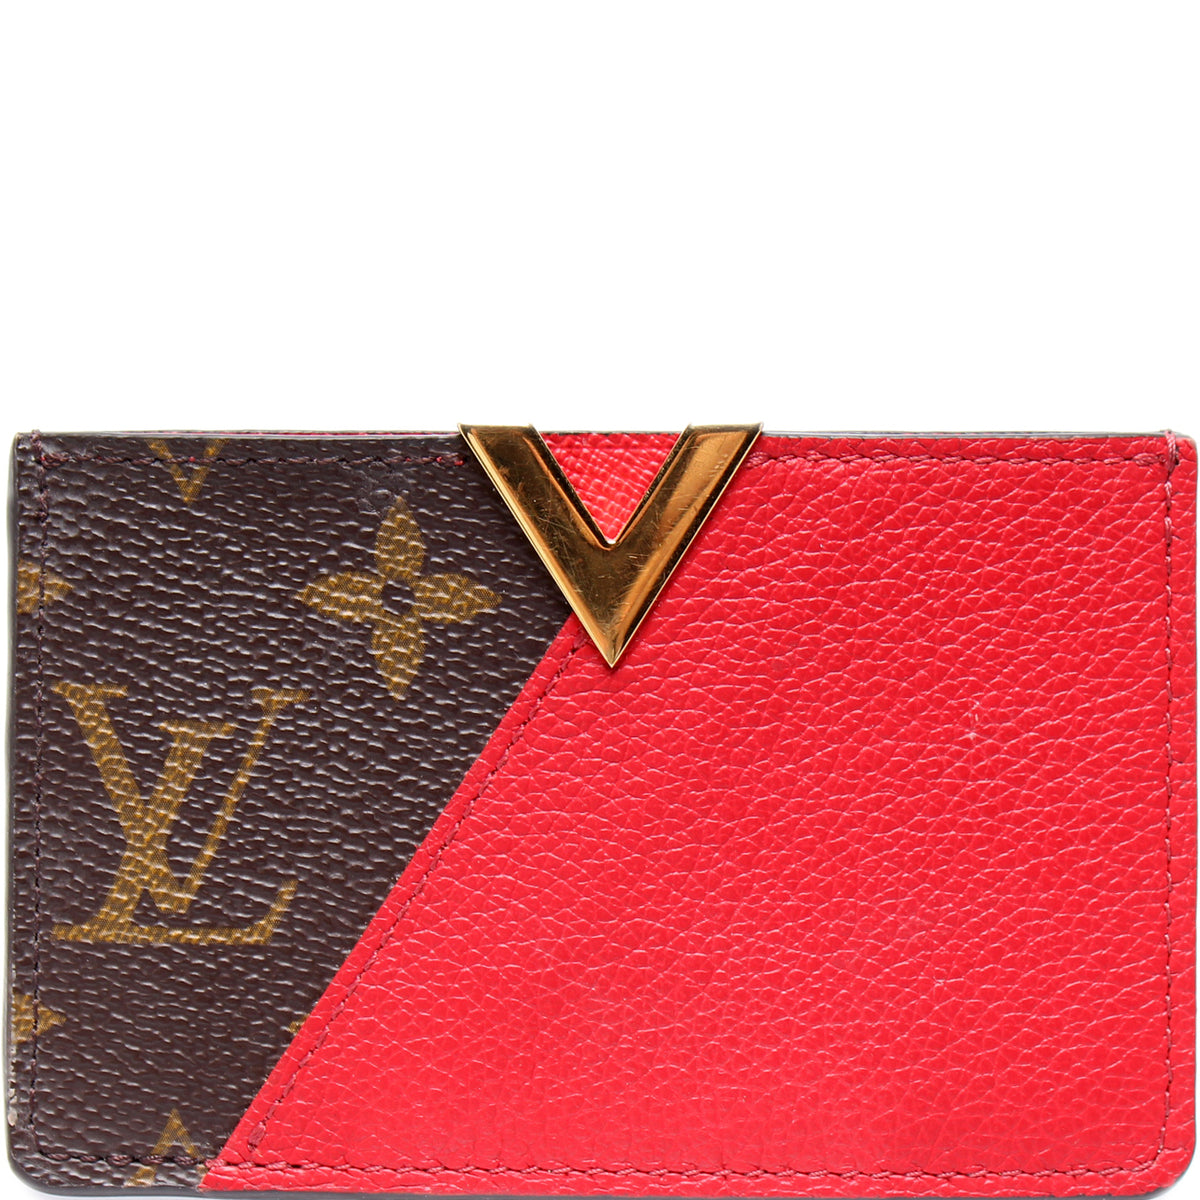 Louis Vuitton Kimono Card Holder - Black Wallets, Accessories